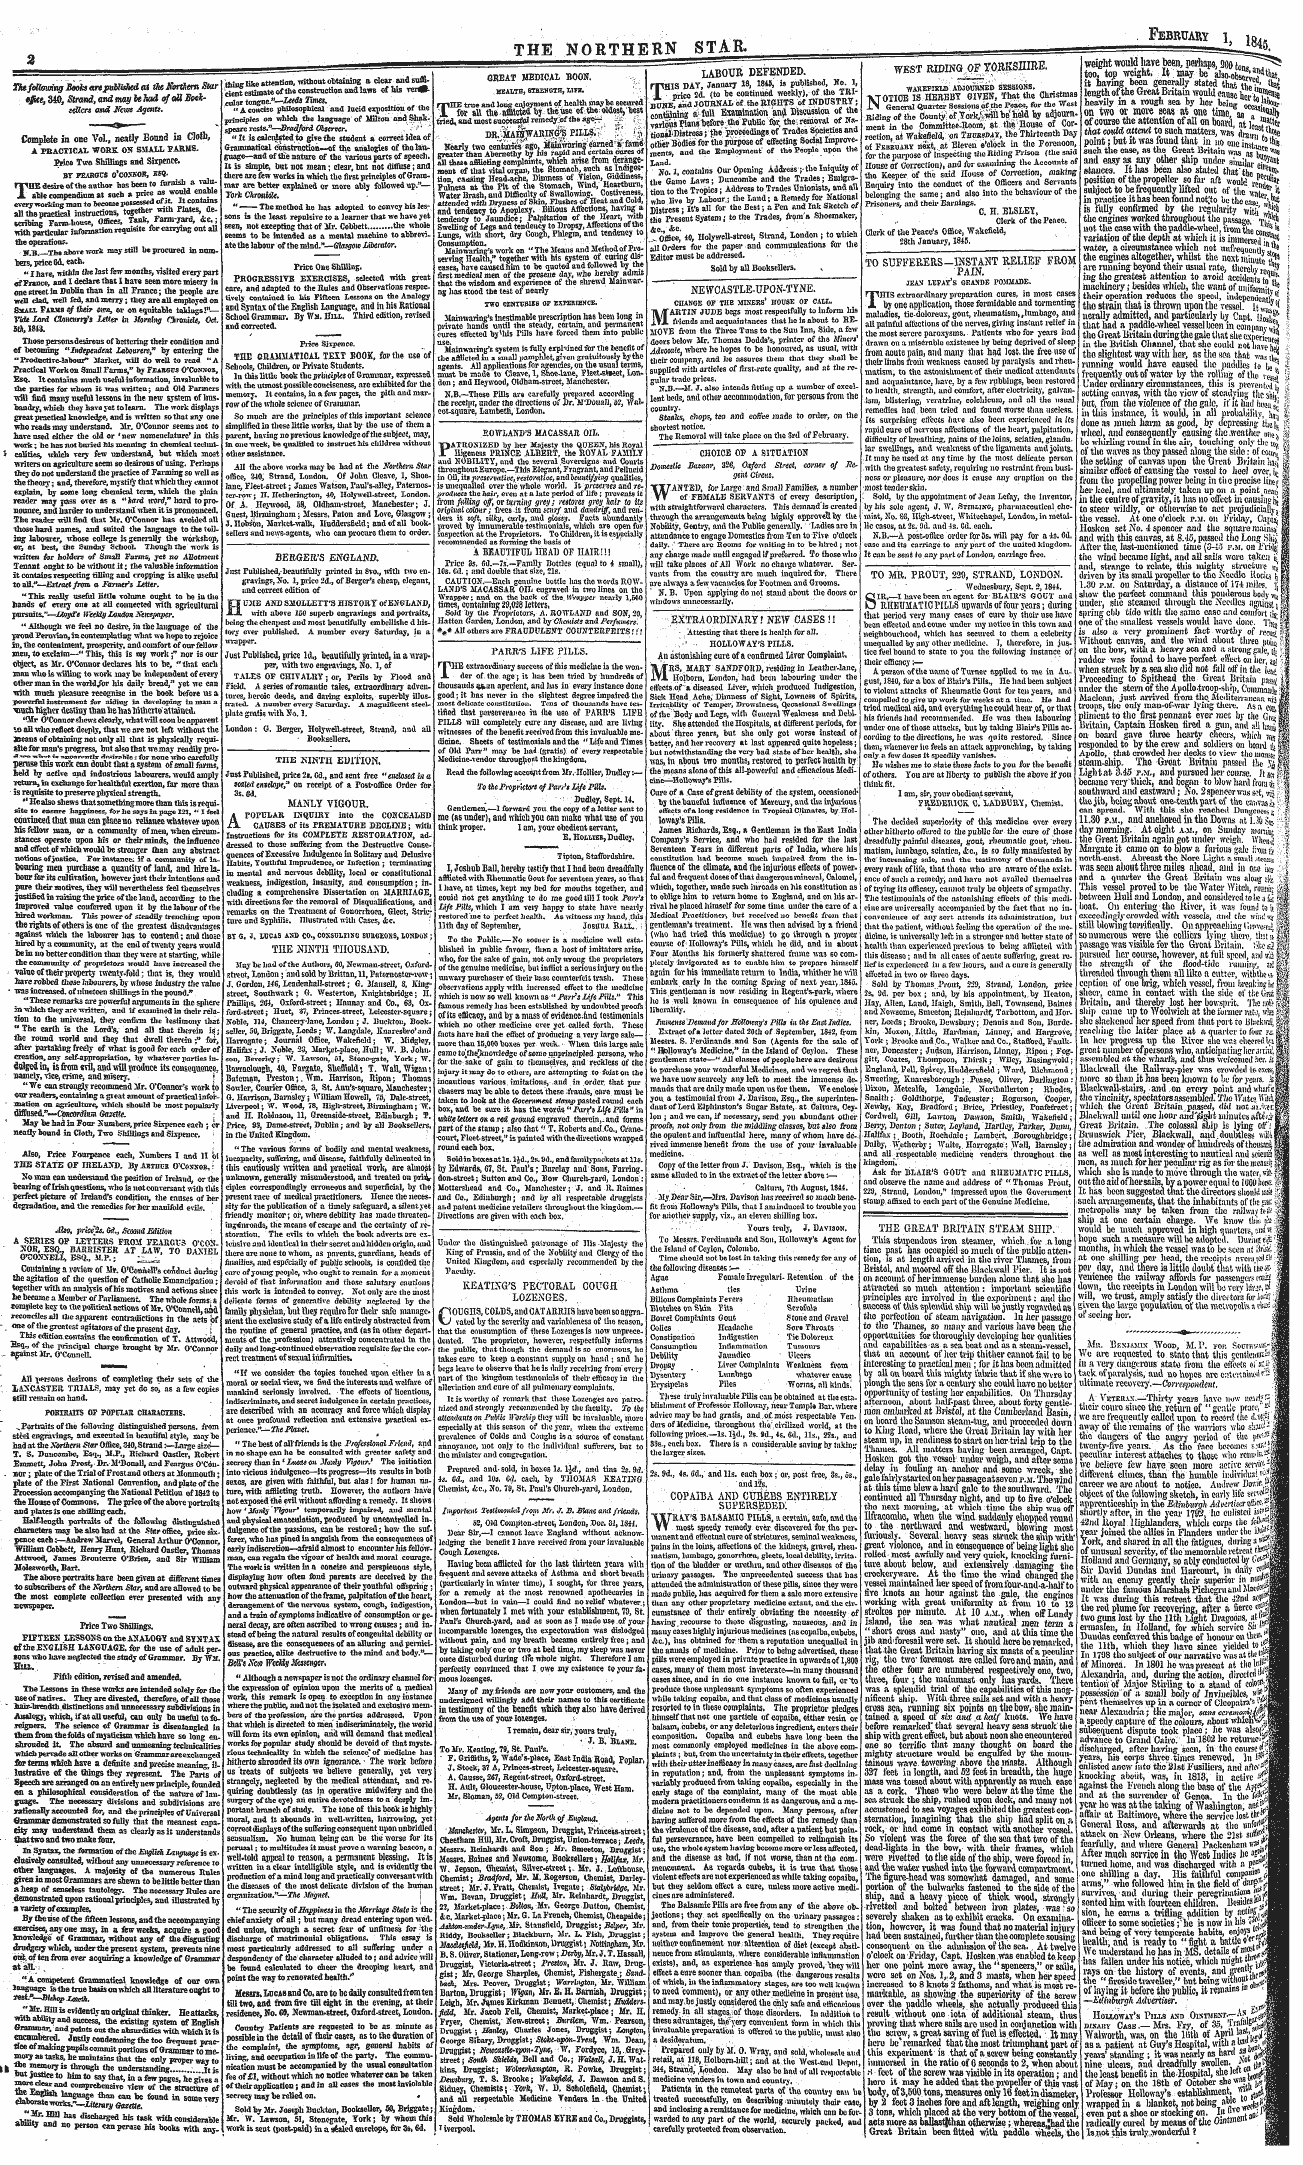 Northern Star (1837-1852): jS F Y, 3rd edition - Ad00221